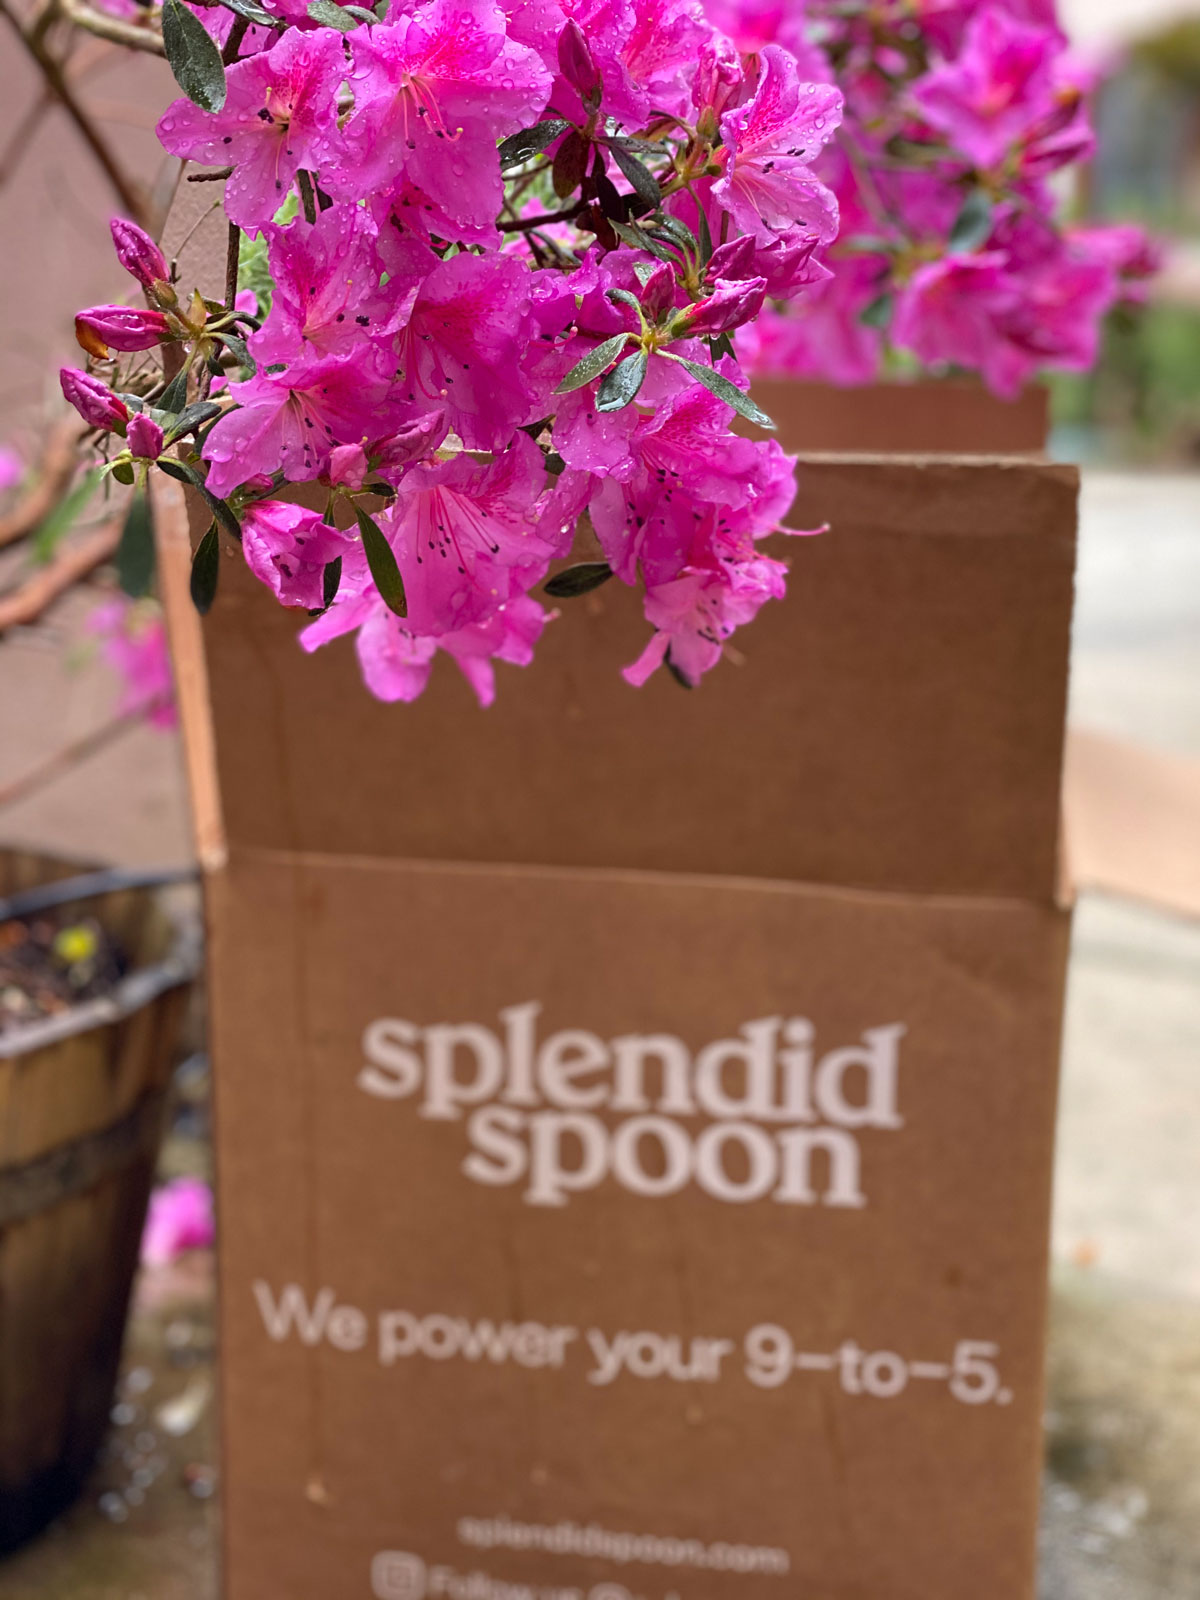 Splendid Spoon Delivery Deals